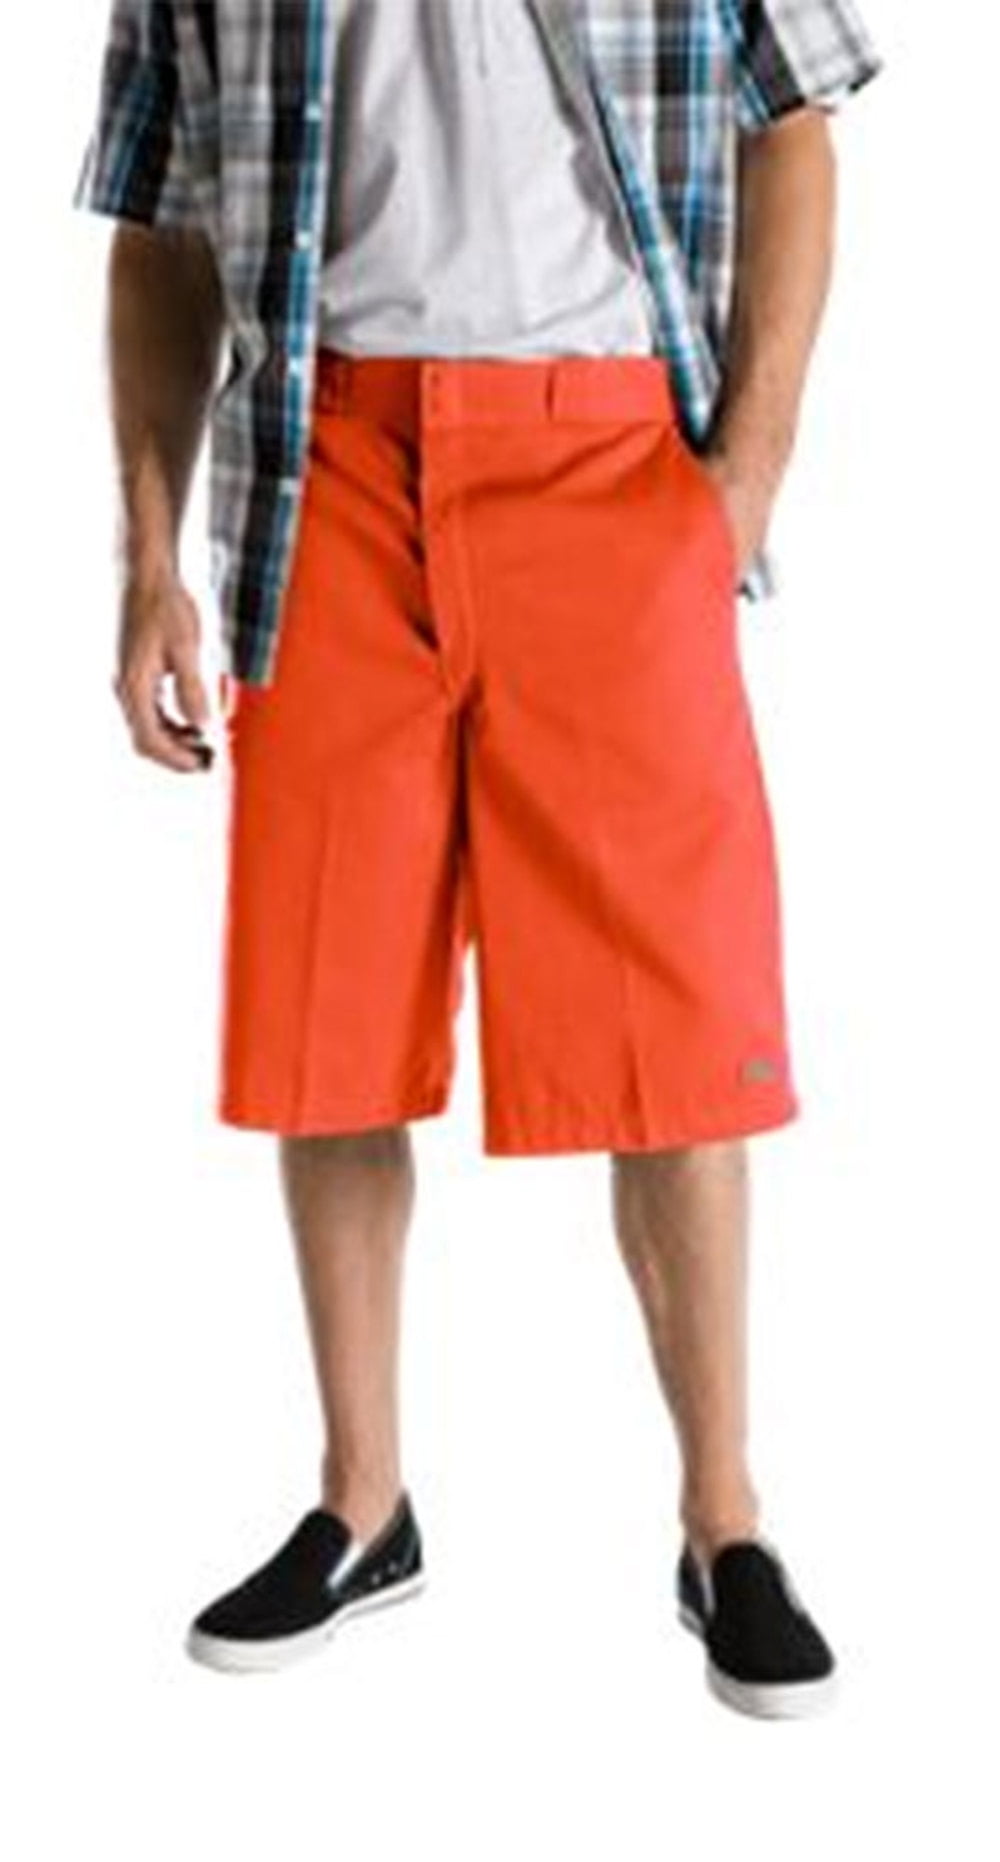 Men's 13 Multi-Use Work Shorts ORANGE 33 - Walmart.com